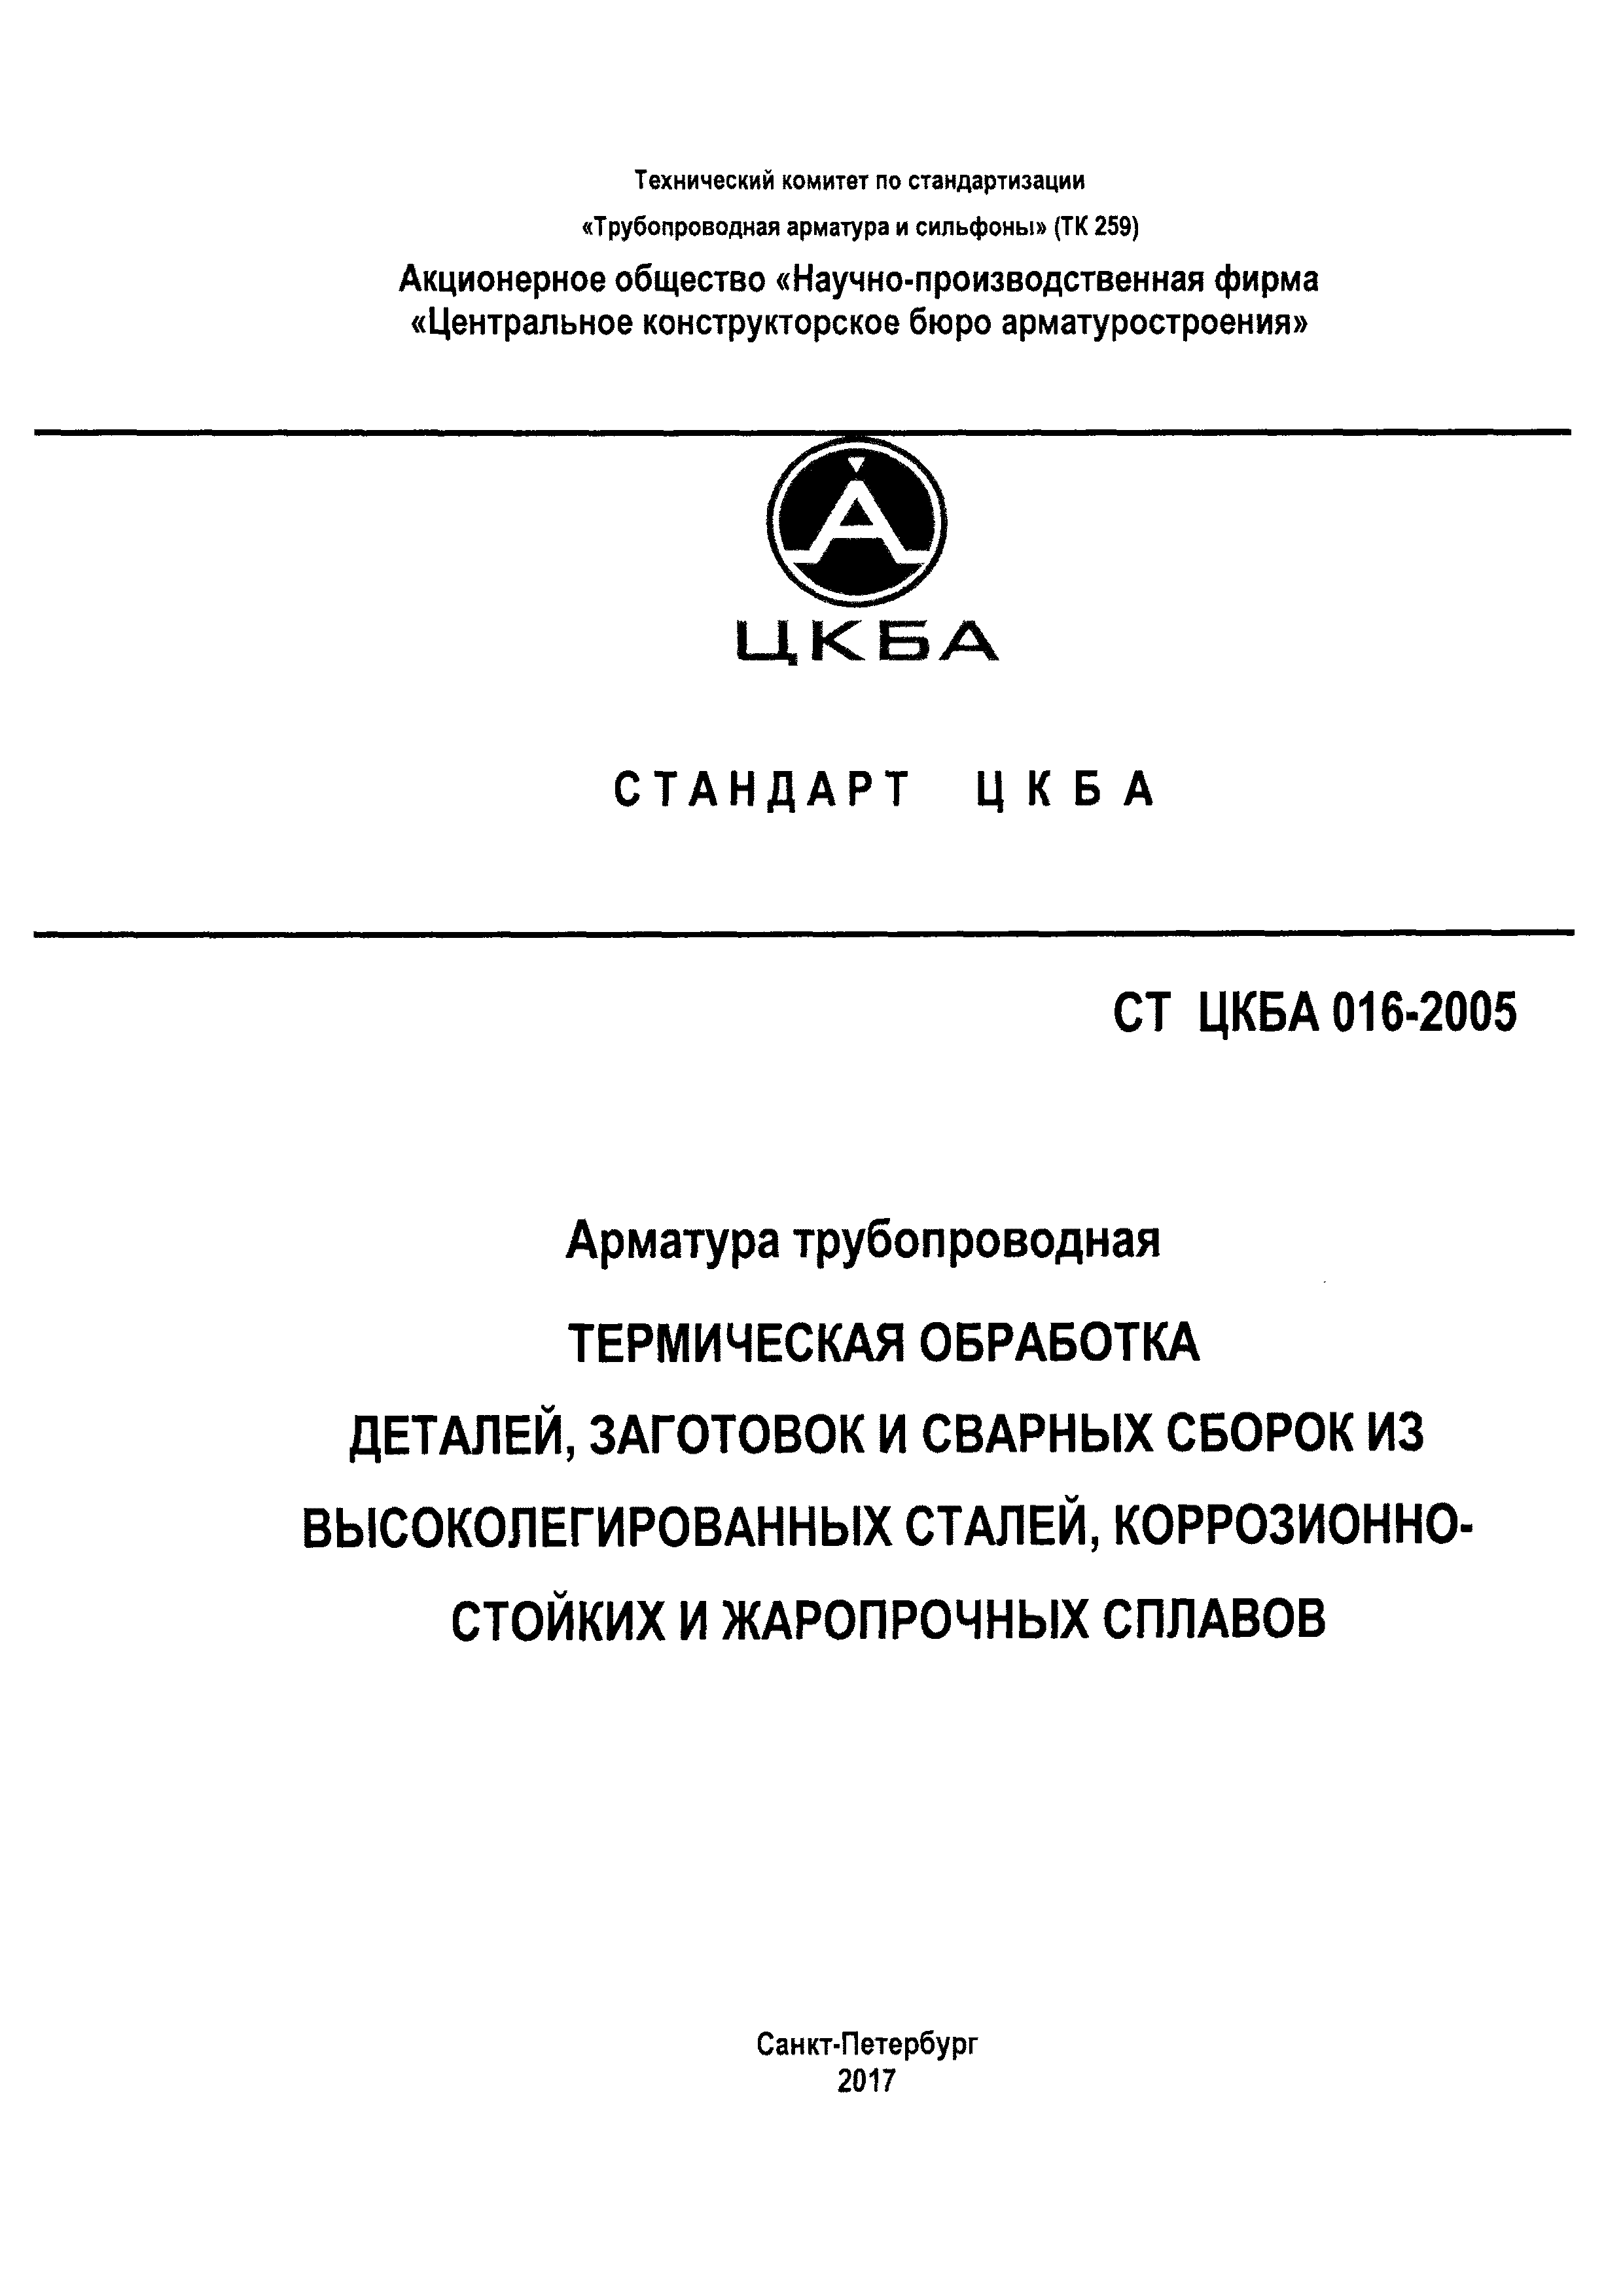 СТ ЦКБА 016-2005